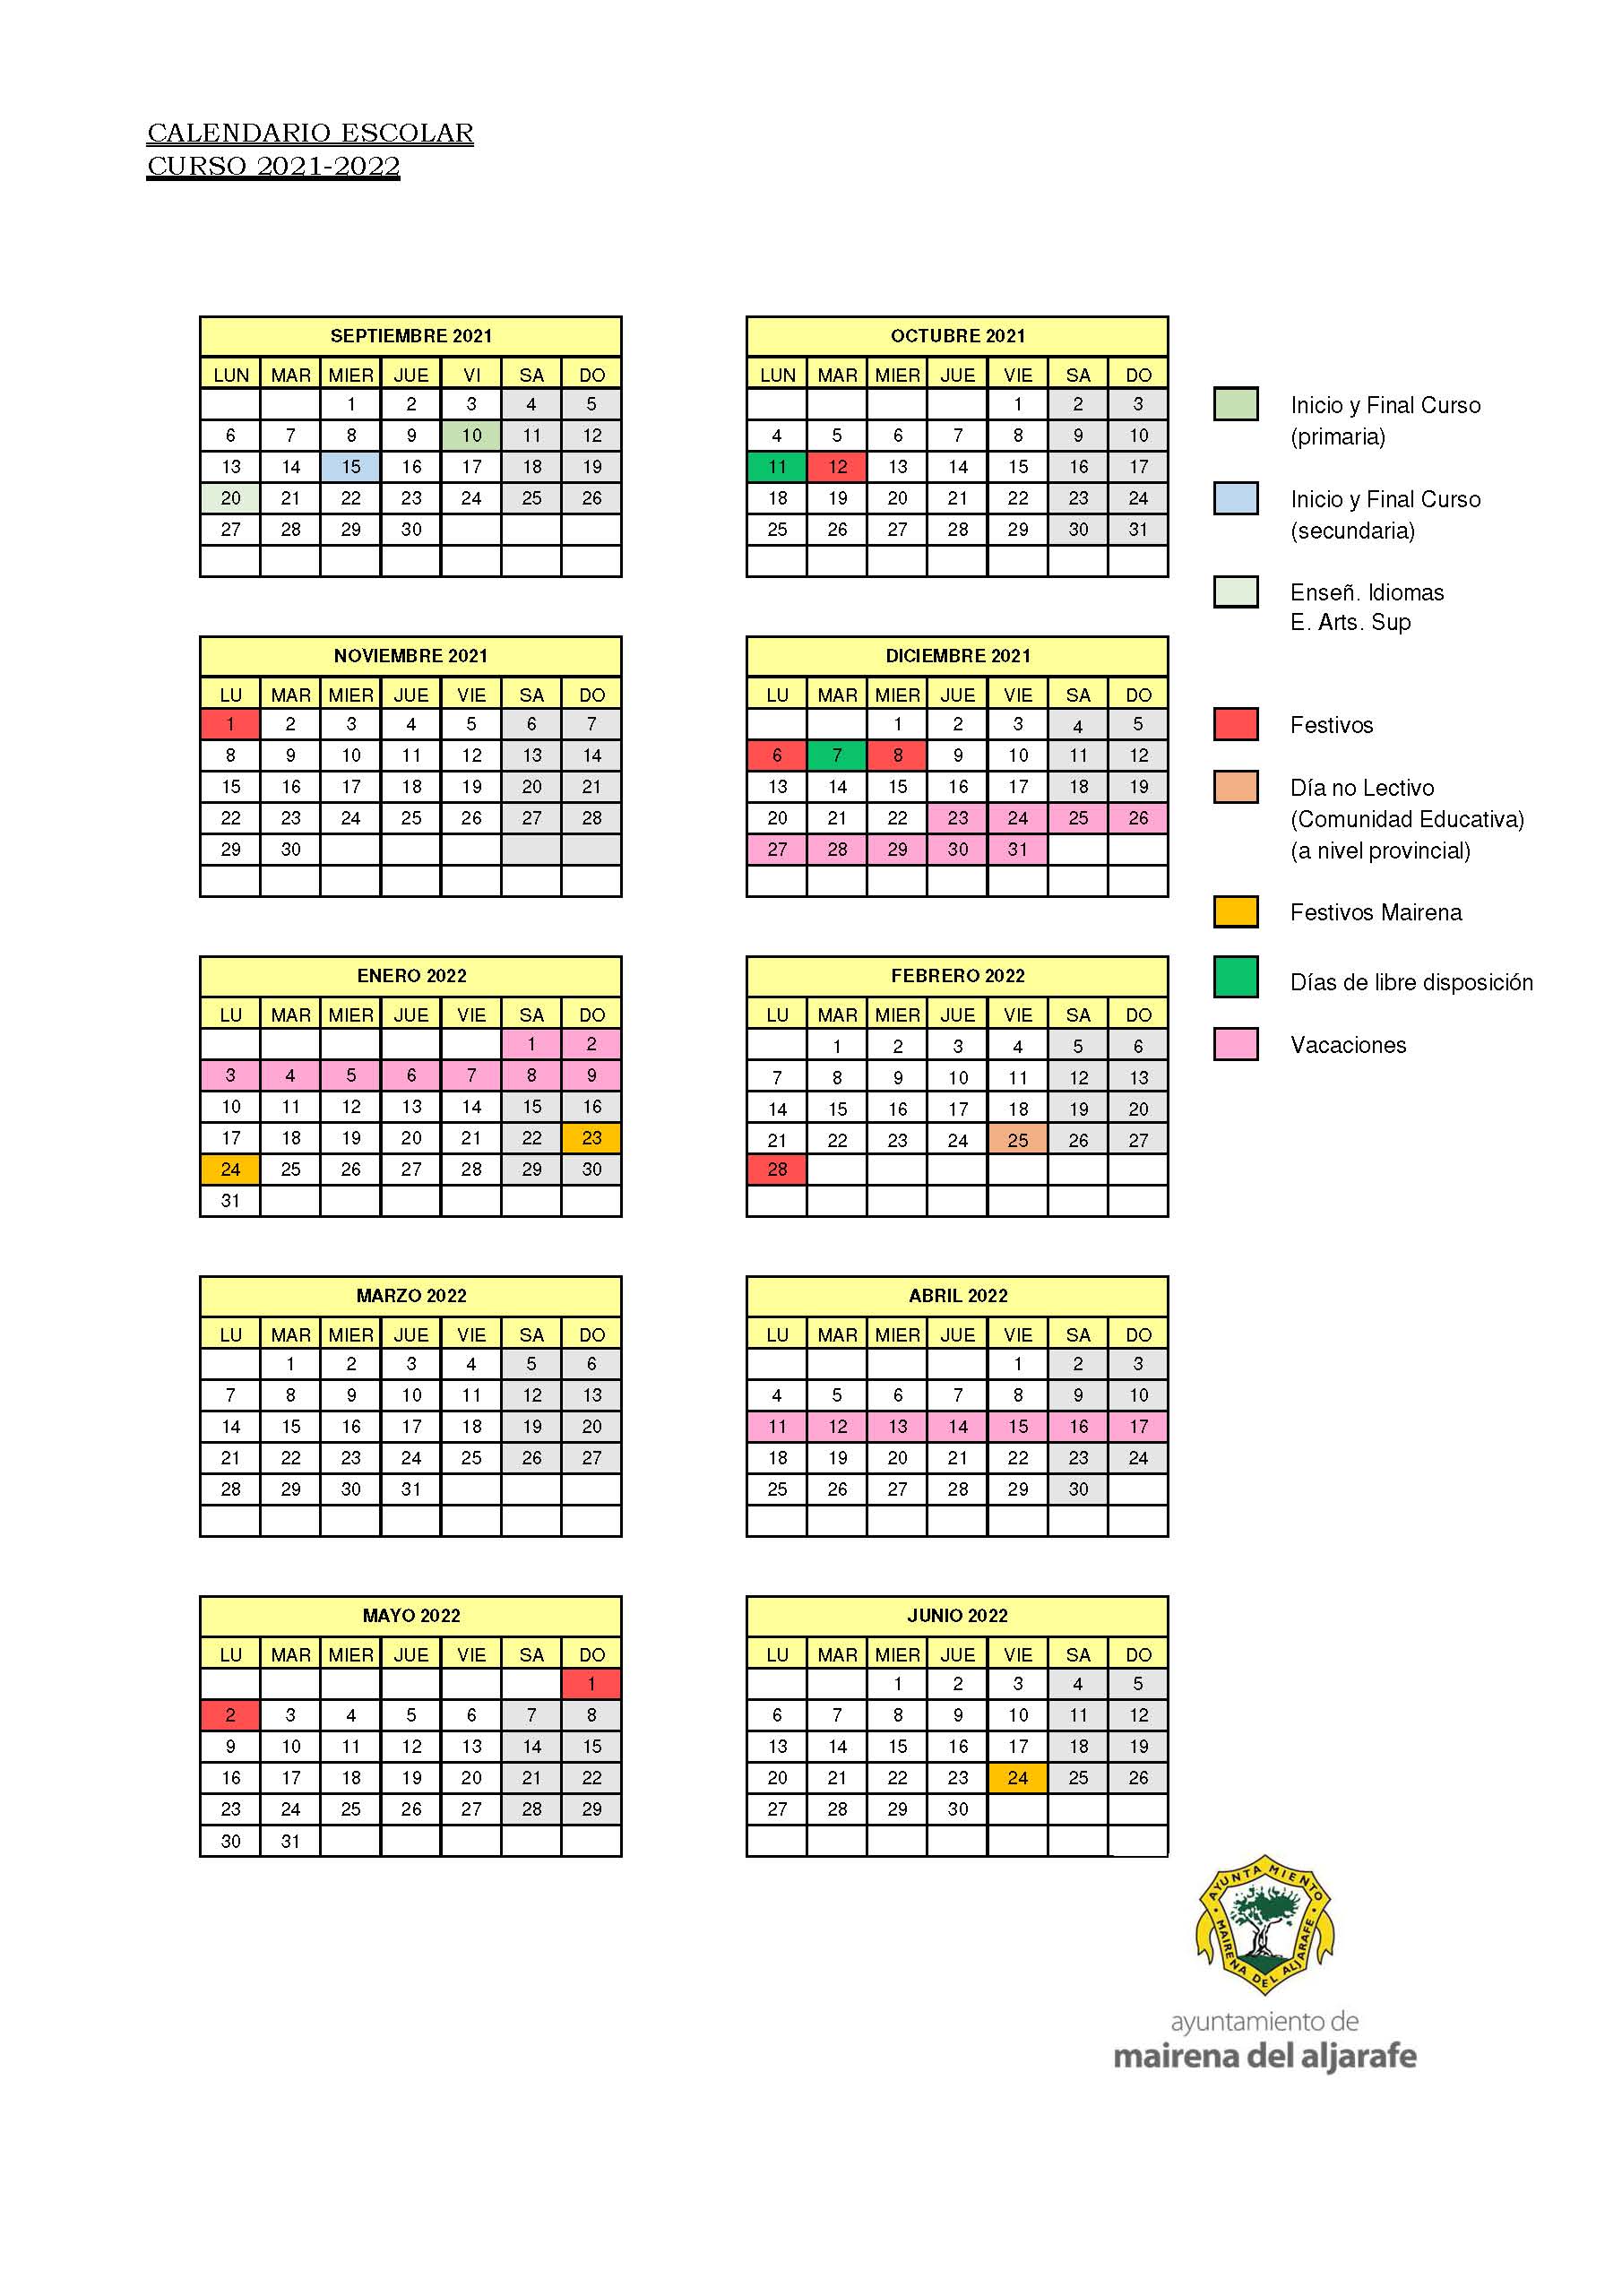 Calendario Escolar 2021-2022 (MAIRENA)_Página_1